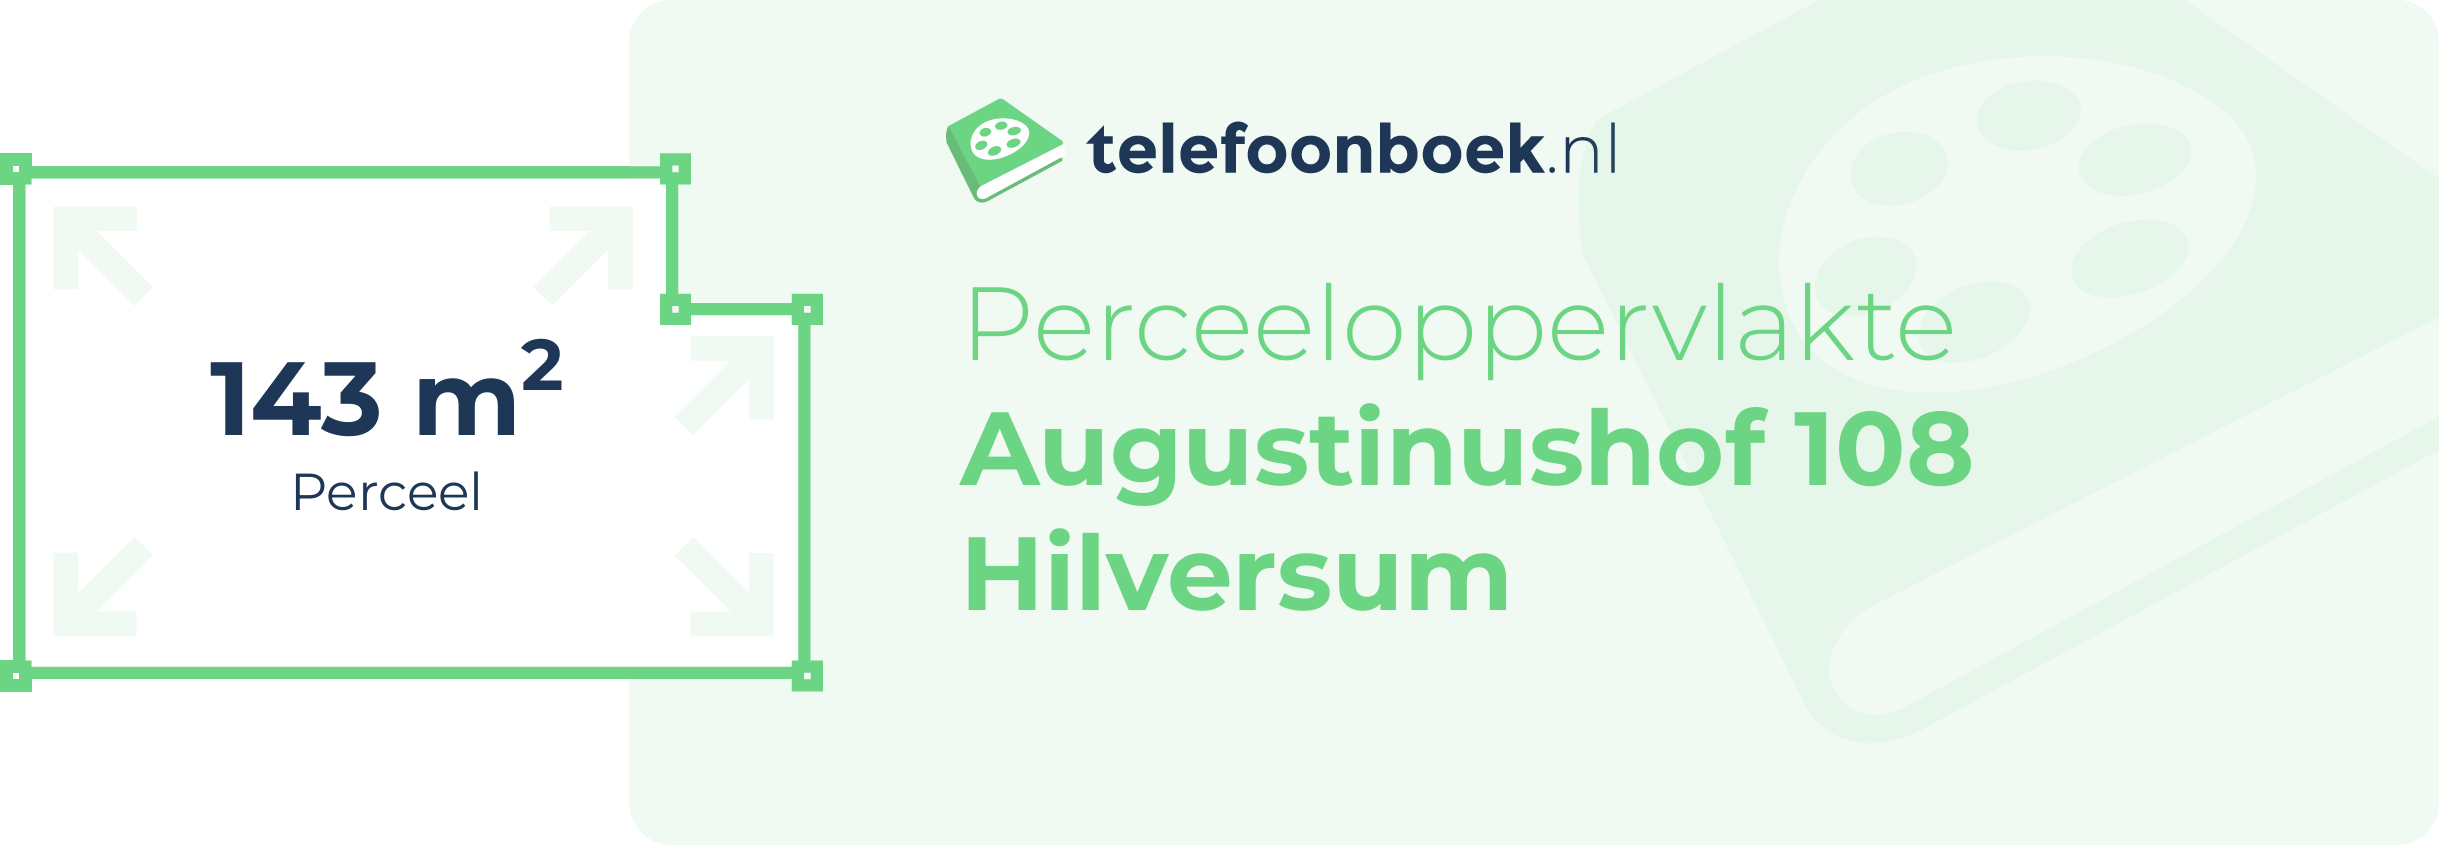 Perceeloppervlakte Augustinushof 108 Hilversum